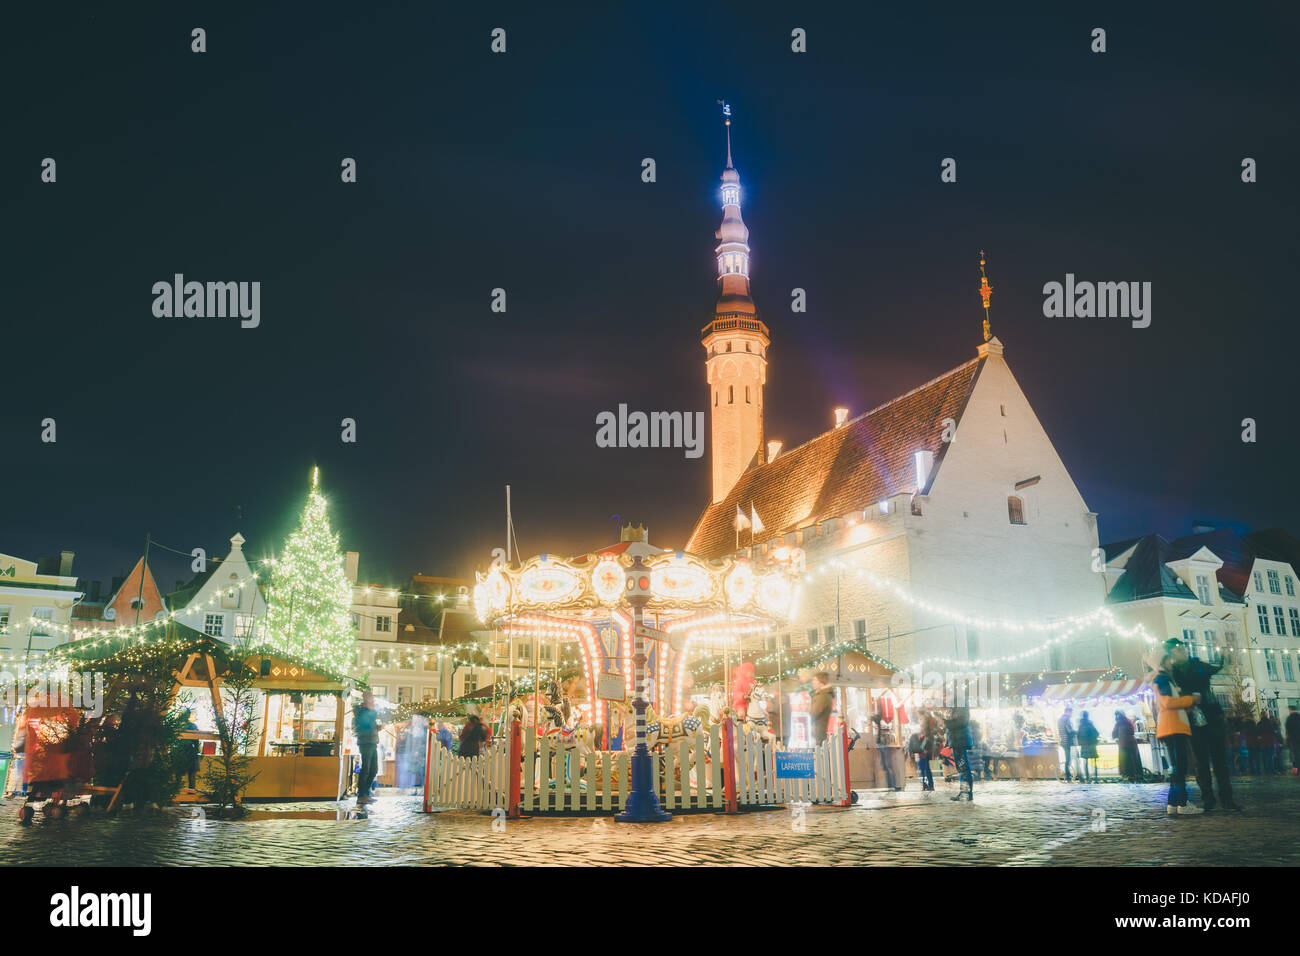 TALLINN, ESTONIA - NOVEMBER 20, 2016: Traditional christmas market in Tallinn old town. Locals and tourists enjoy winter holidays. Stock Photo